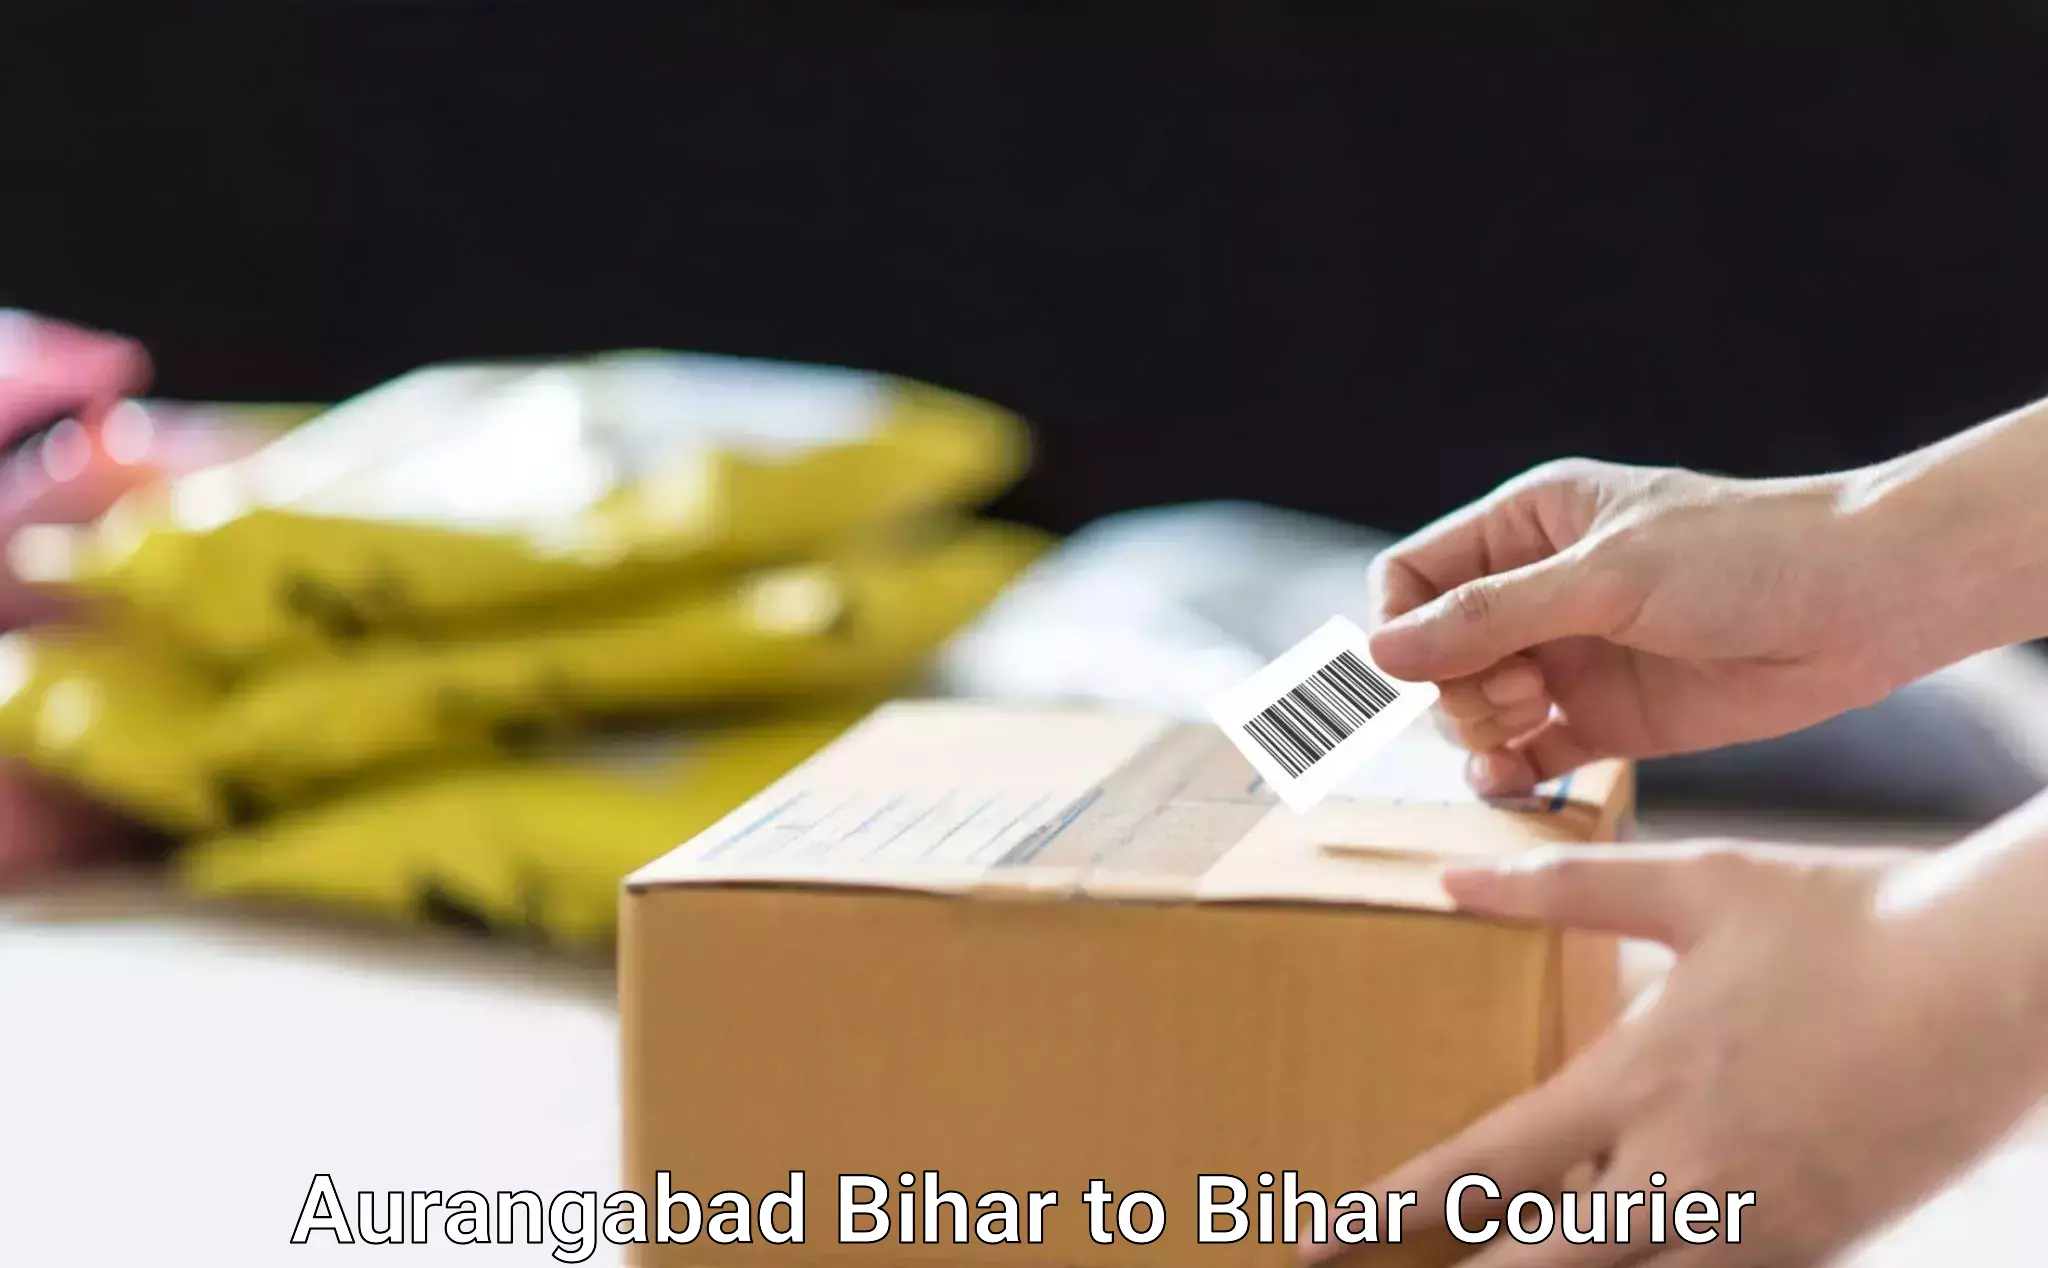 Budget-friendly moving services Aurangabad Bihar to Supaul